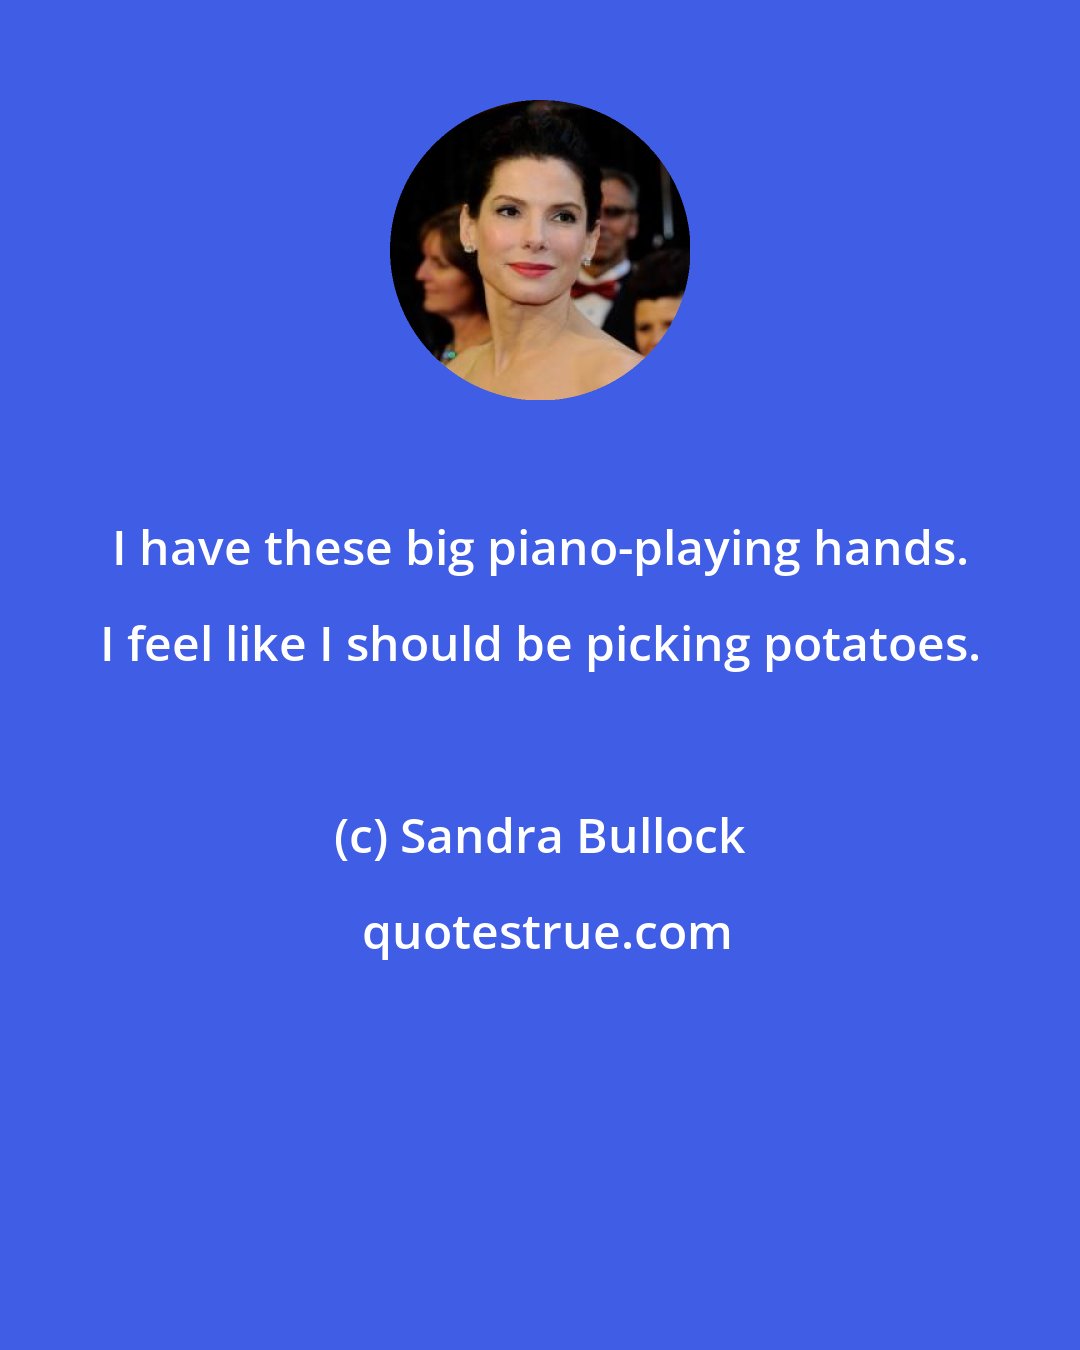 Sandra Bullock: I have these big piano-playing hands. I feel like I should be picking potatoes.